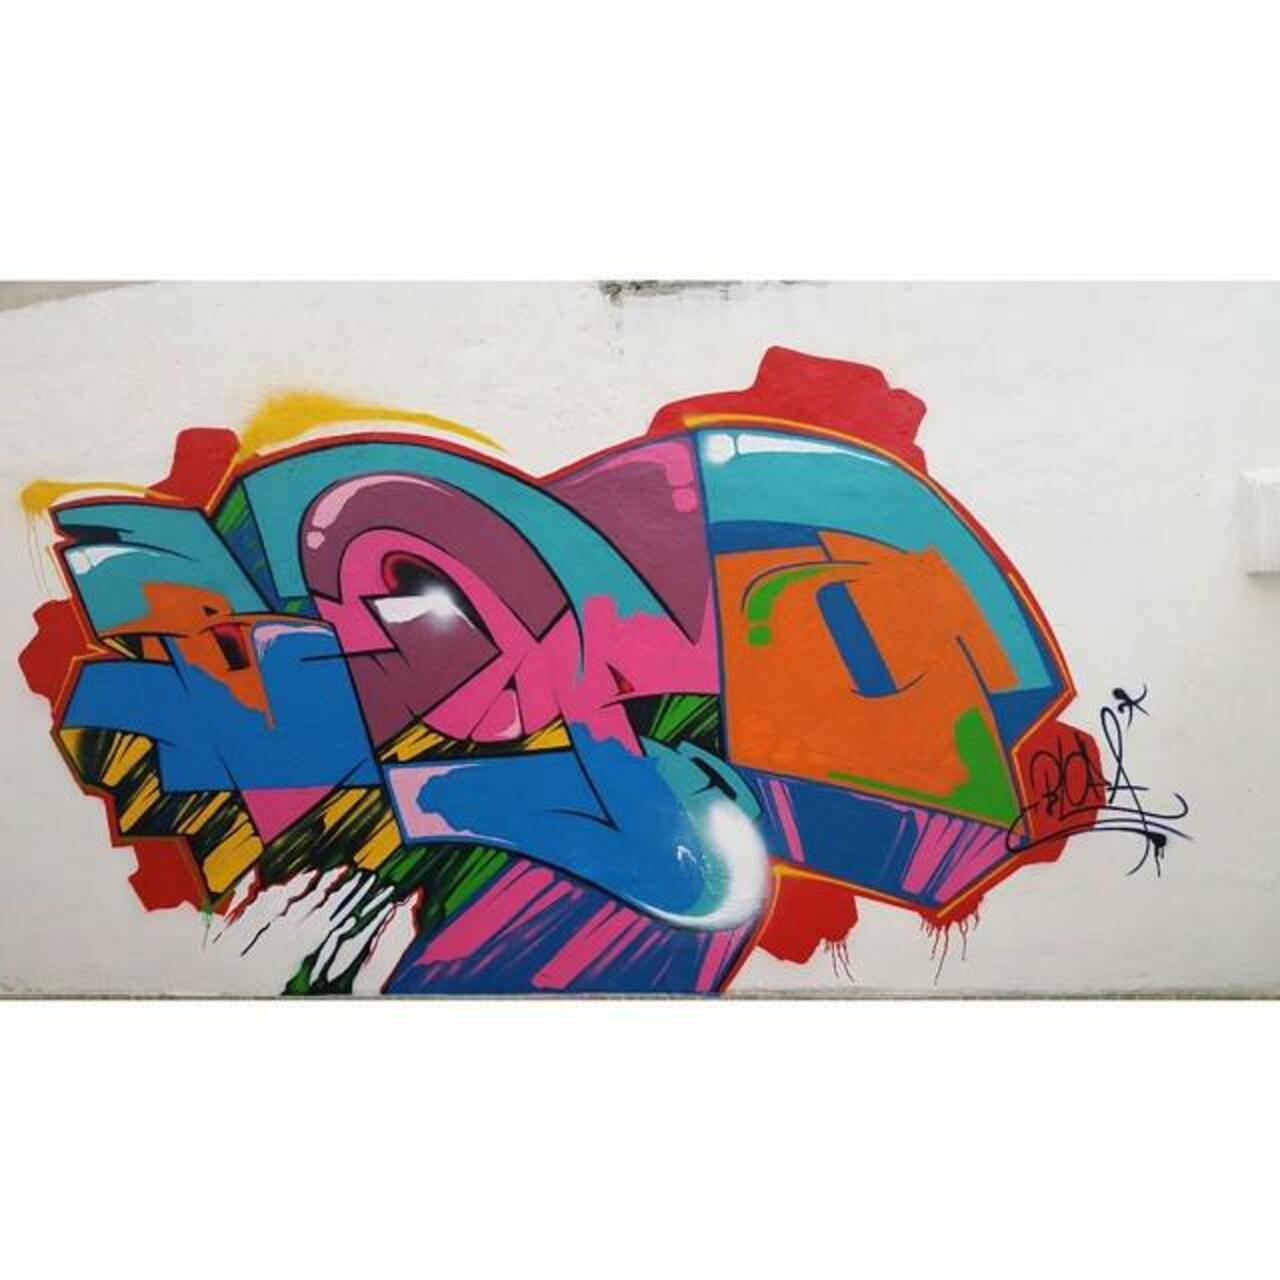 ⚡ #BLOPA 
#mtn #mtn94 #graffiti #graffitiart #graffitiartist #streetart #art #arte #arteurbana #graffitikings #lett… http://t.co/fXyhLxfRWj